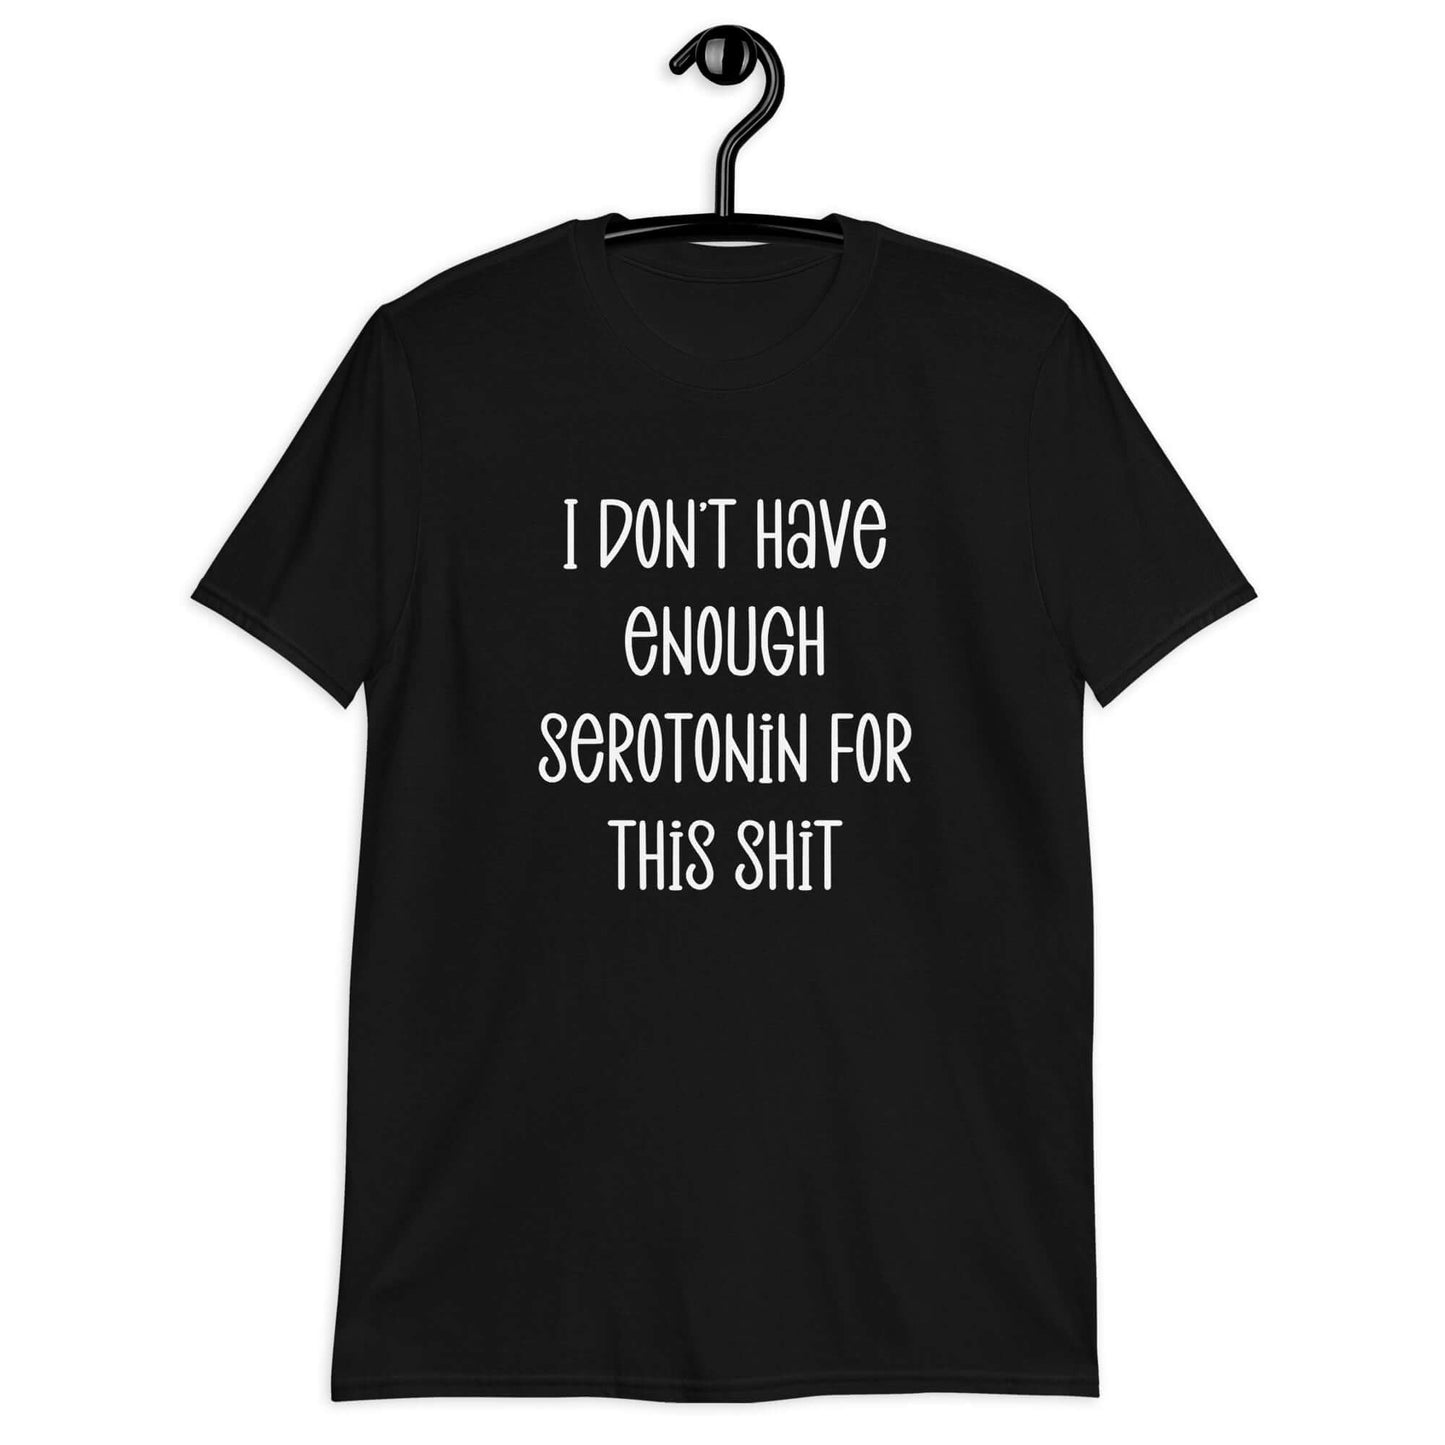 I don't have enough serotonin for this t-shirt